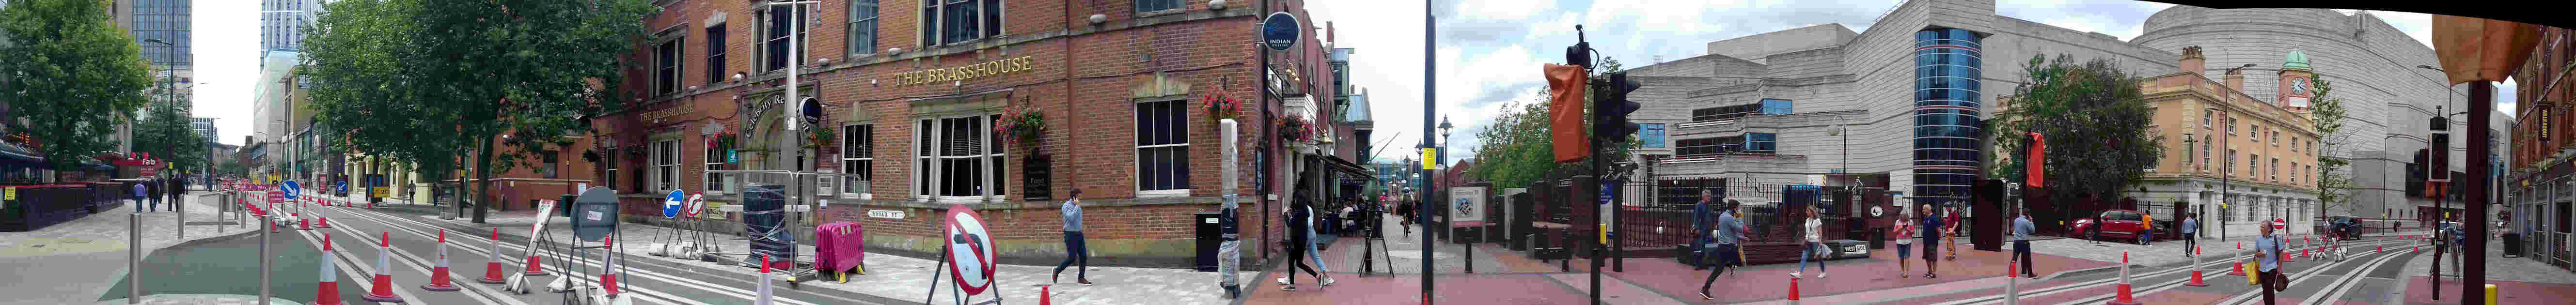 ImagesBirmingham/Birmingham Pubs Broad Street Brasshouse Panorama.jpg